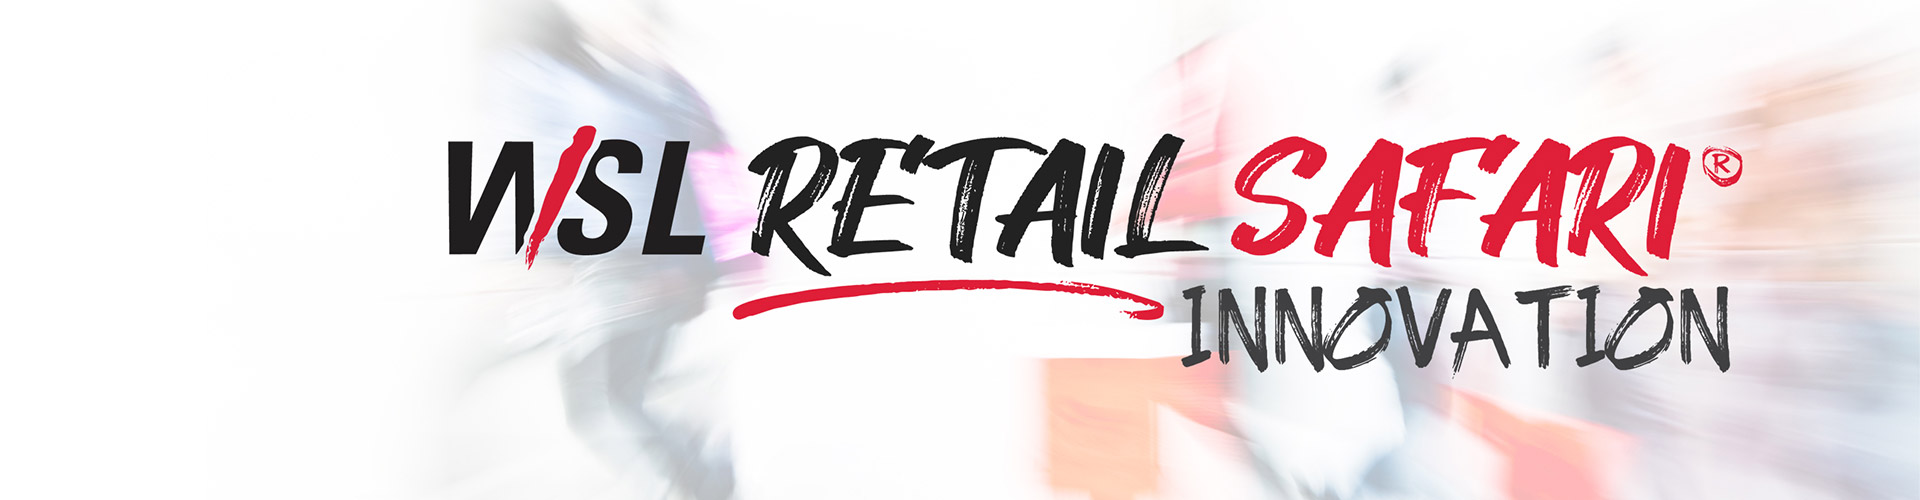 A Glimpse of WSL’s Retail Safari® 2020 blog banner